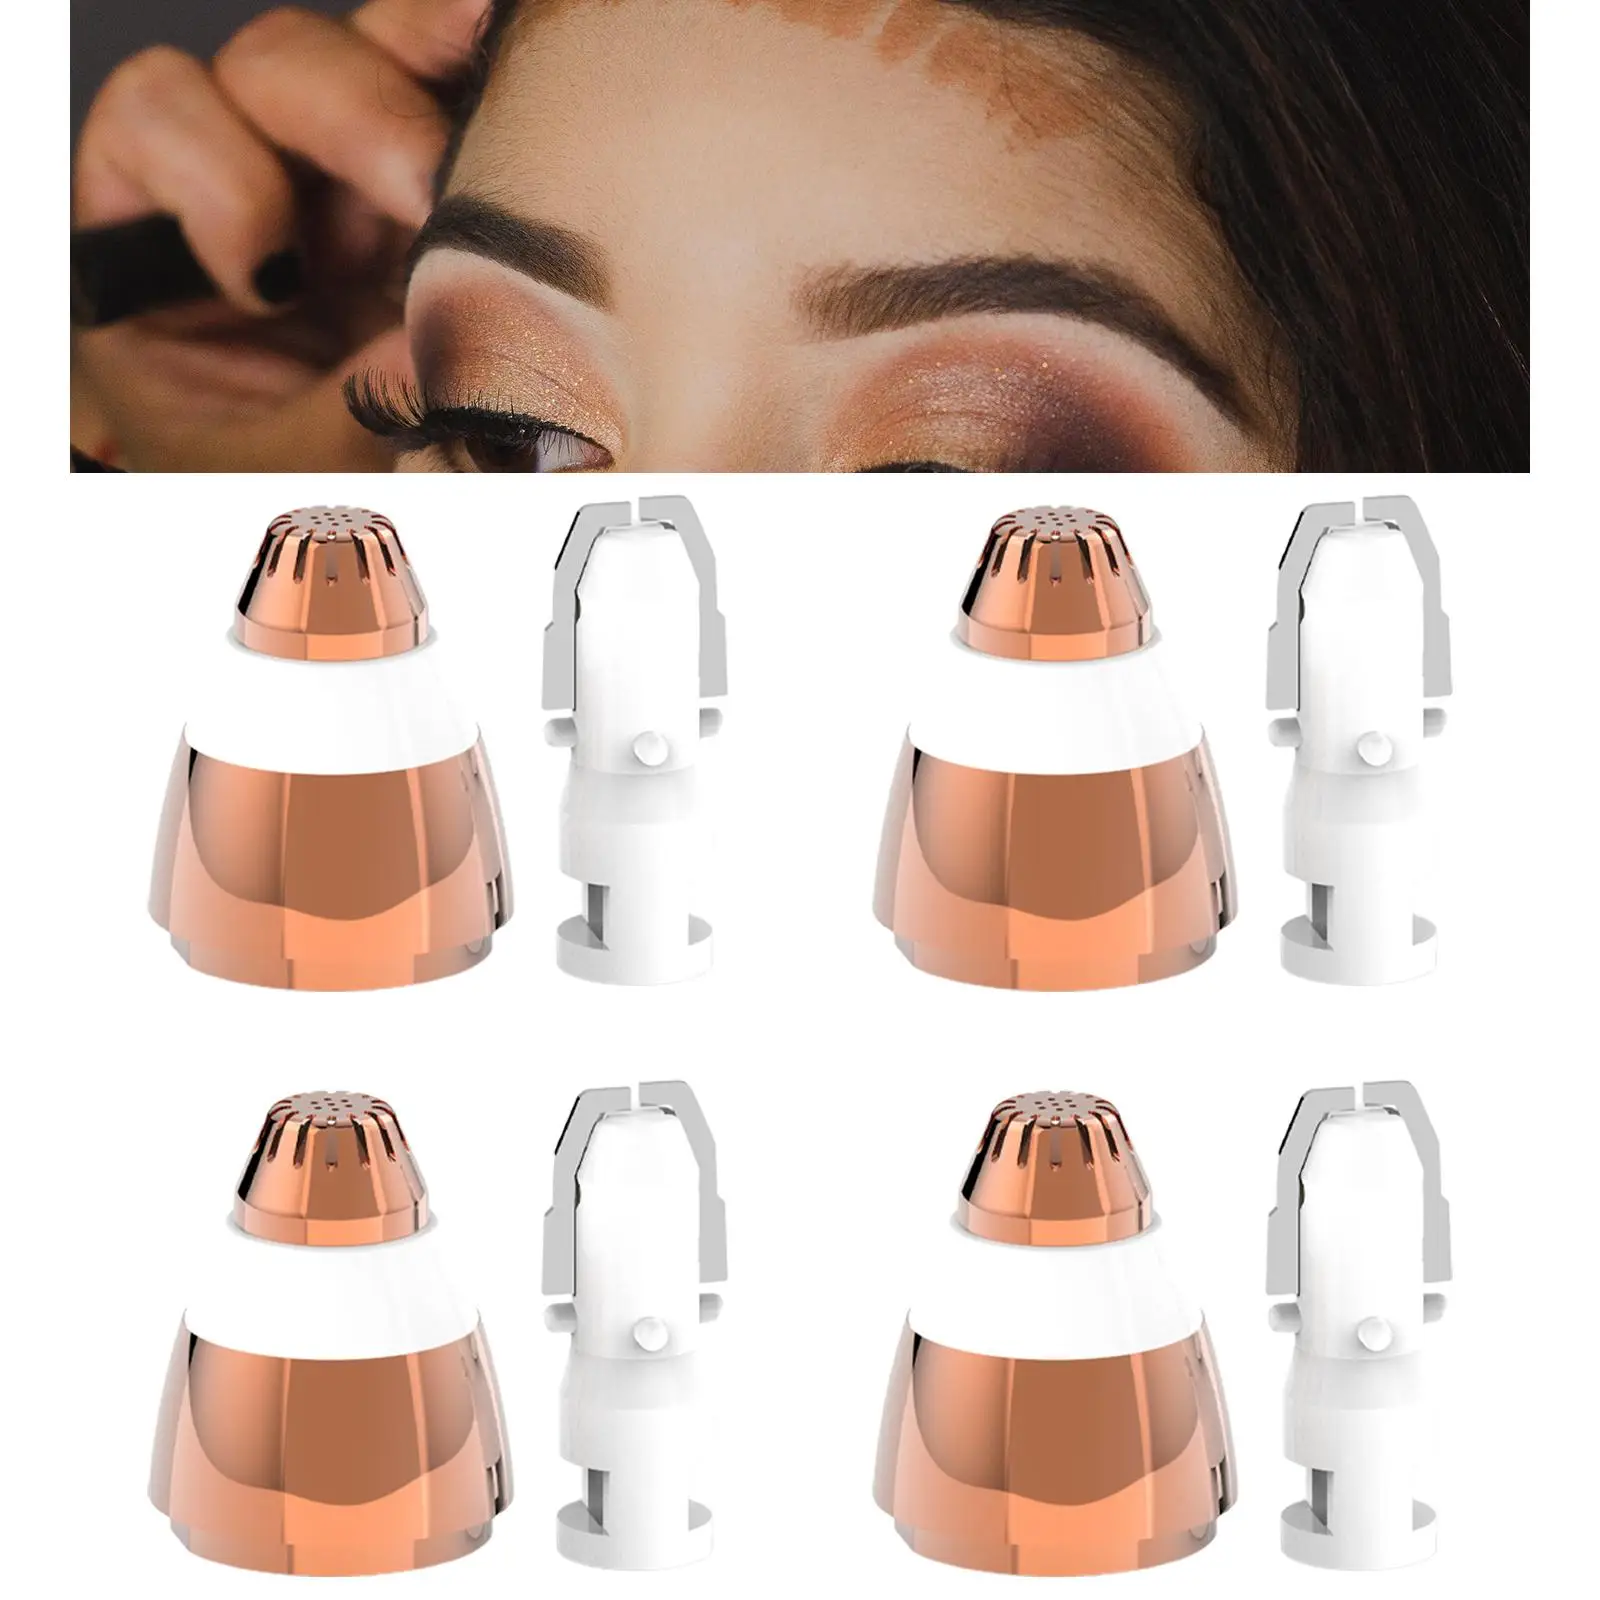 4 Sets Eyebrow Trimmer Replacement Heads Supplies Eye Brow Epilator Women